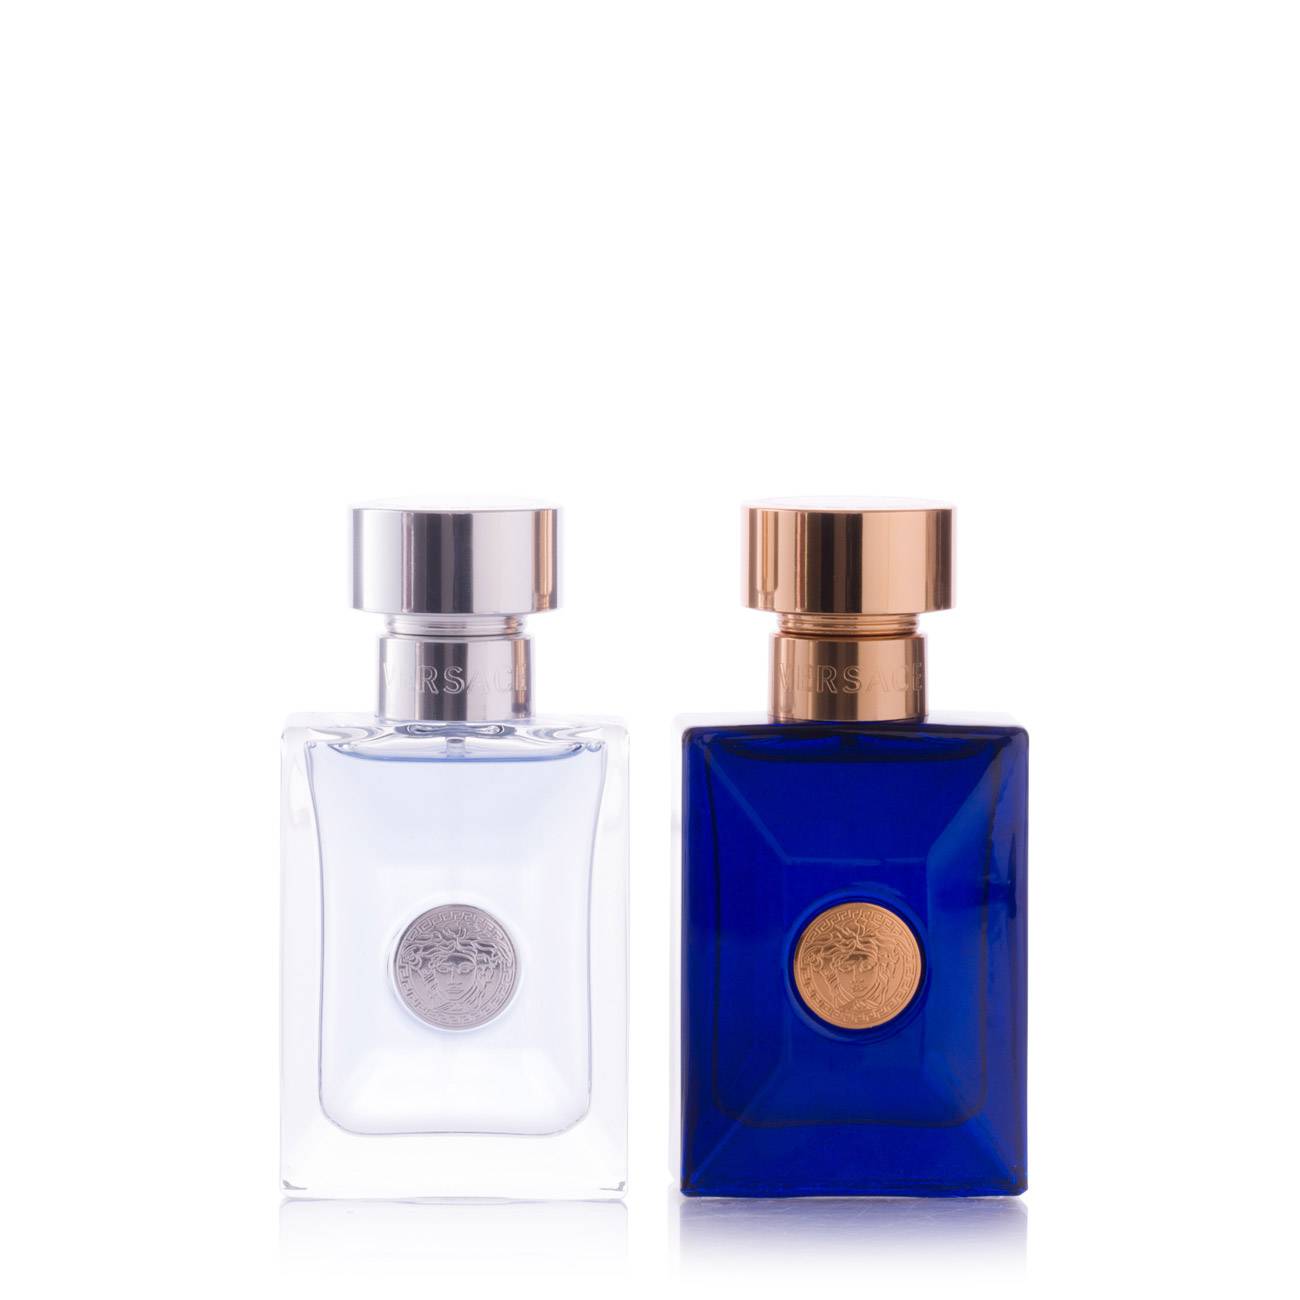 Set parfumuri Versace VERSACE & DYLAN HOMME – MIX DUO 60ml cu comanda online